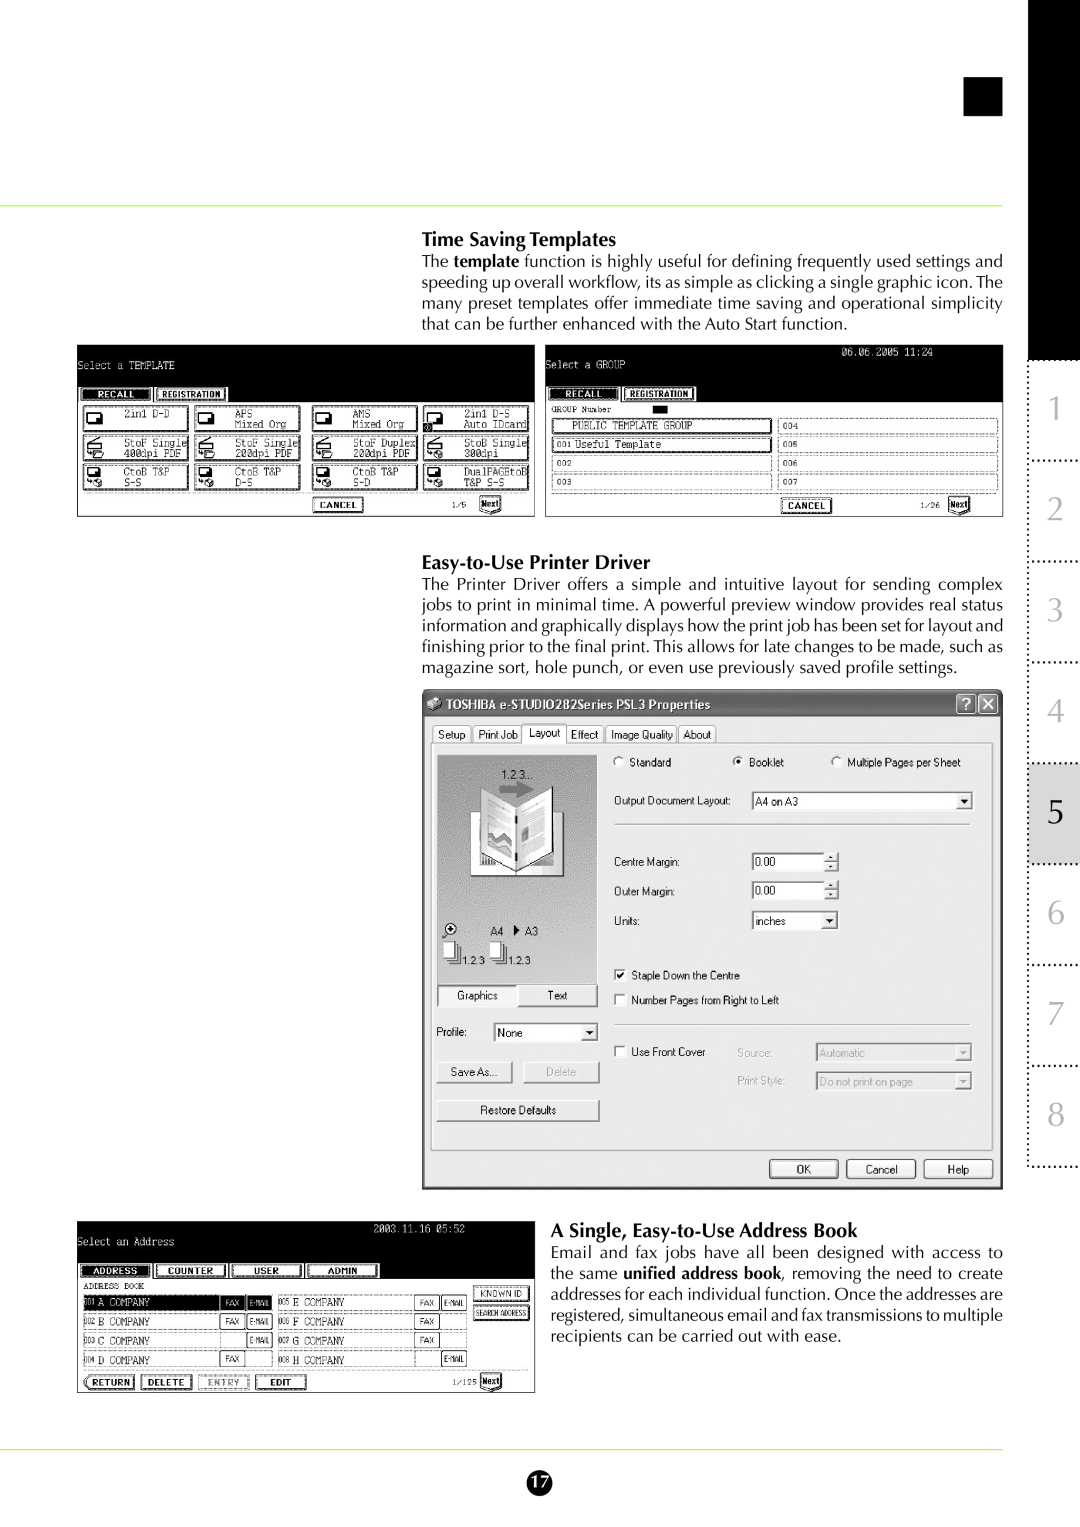 Toshiba 282, 232 manual Time Saving Templates, Easy-to-Use Printer Driver, A Single, Easy-to-Use Address Book 